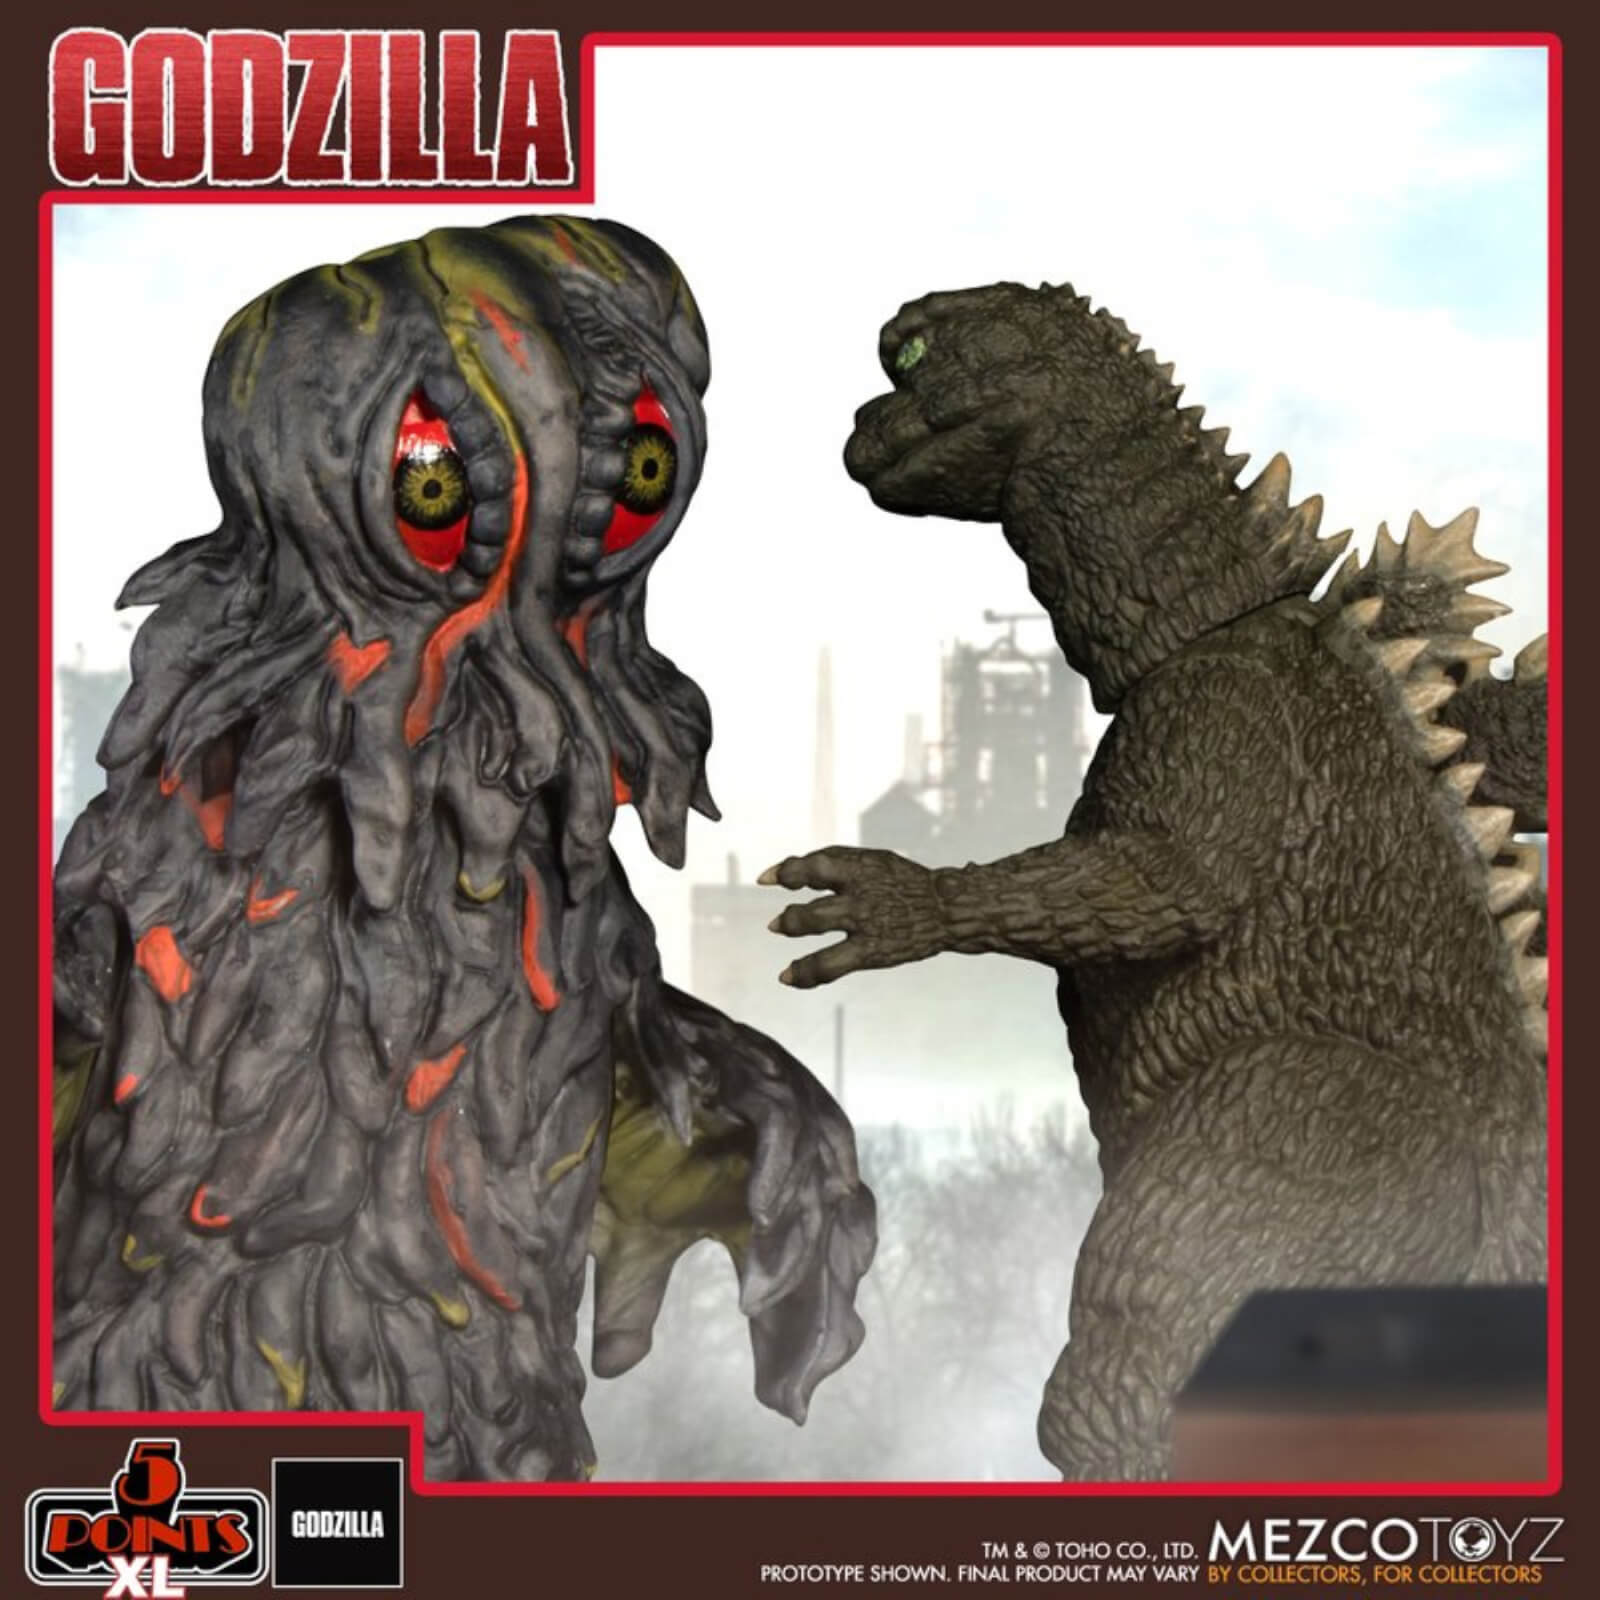 Photos - Action Figures / Transformers Mezco Godzilla 5 Points XL Figure Boxed Set - Godzilla Vs. Hedorah MZ17094